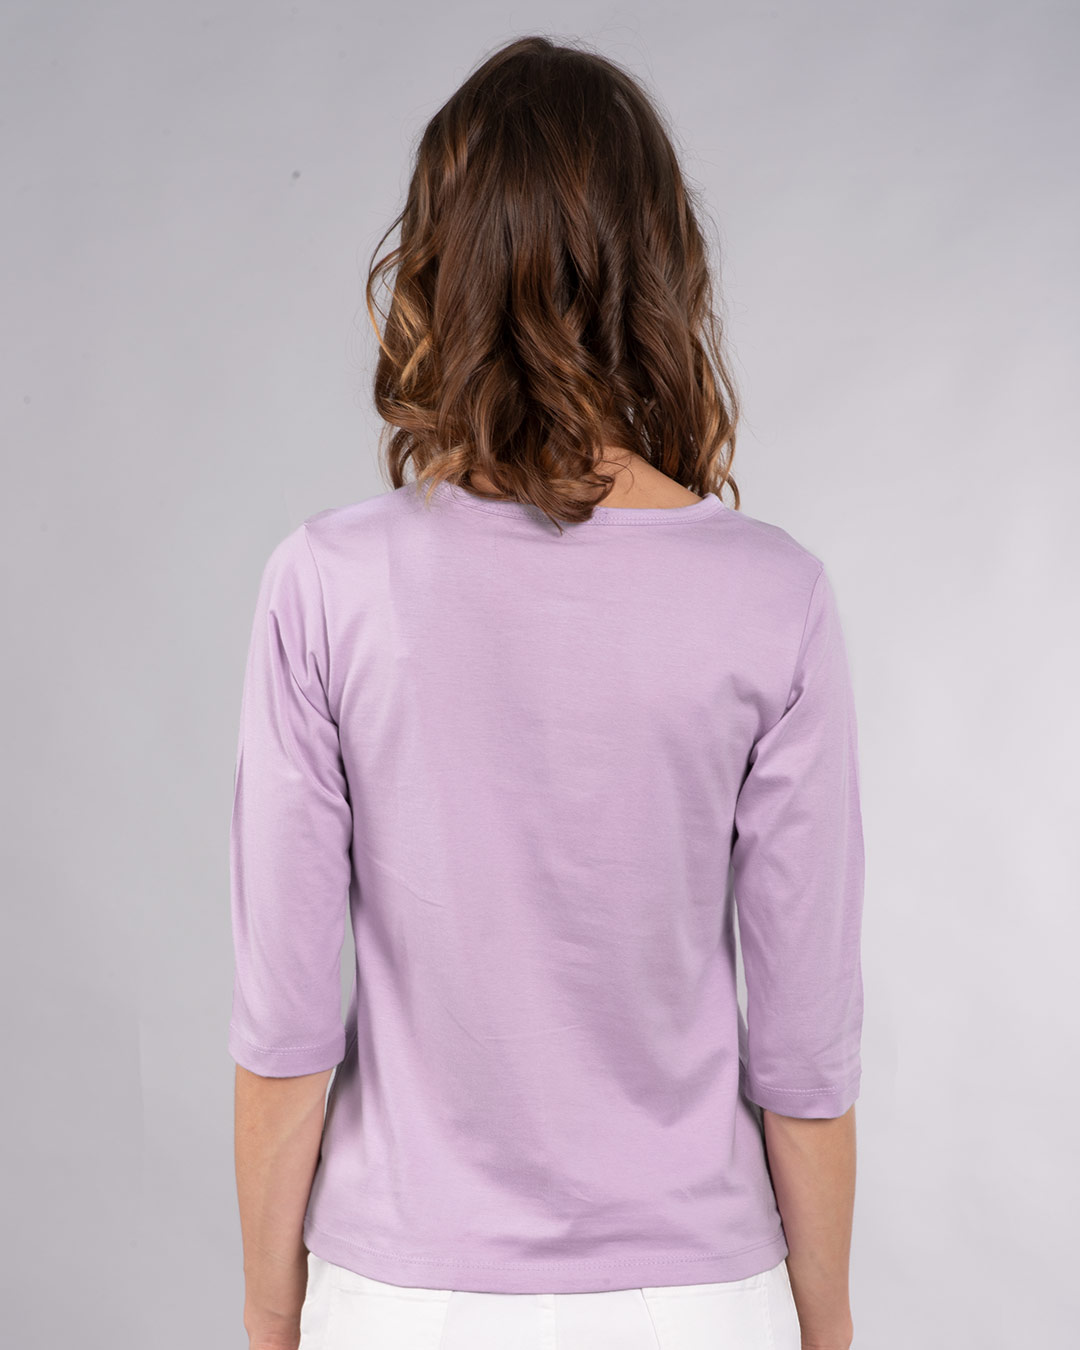 Shop Pocket Dalmatian Round Neck 3/4th Sleeve T-Shirt (DL)-Back